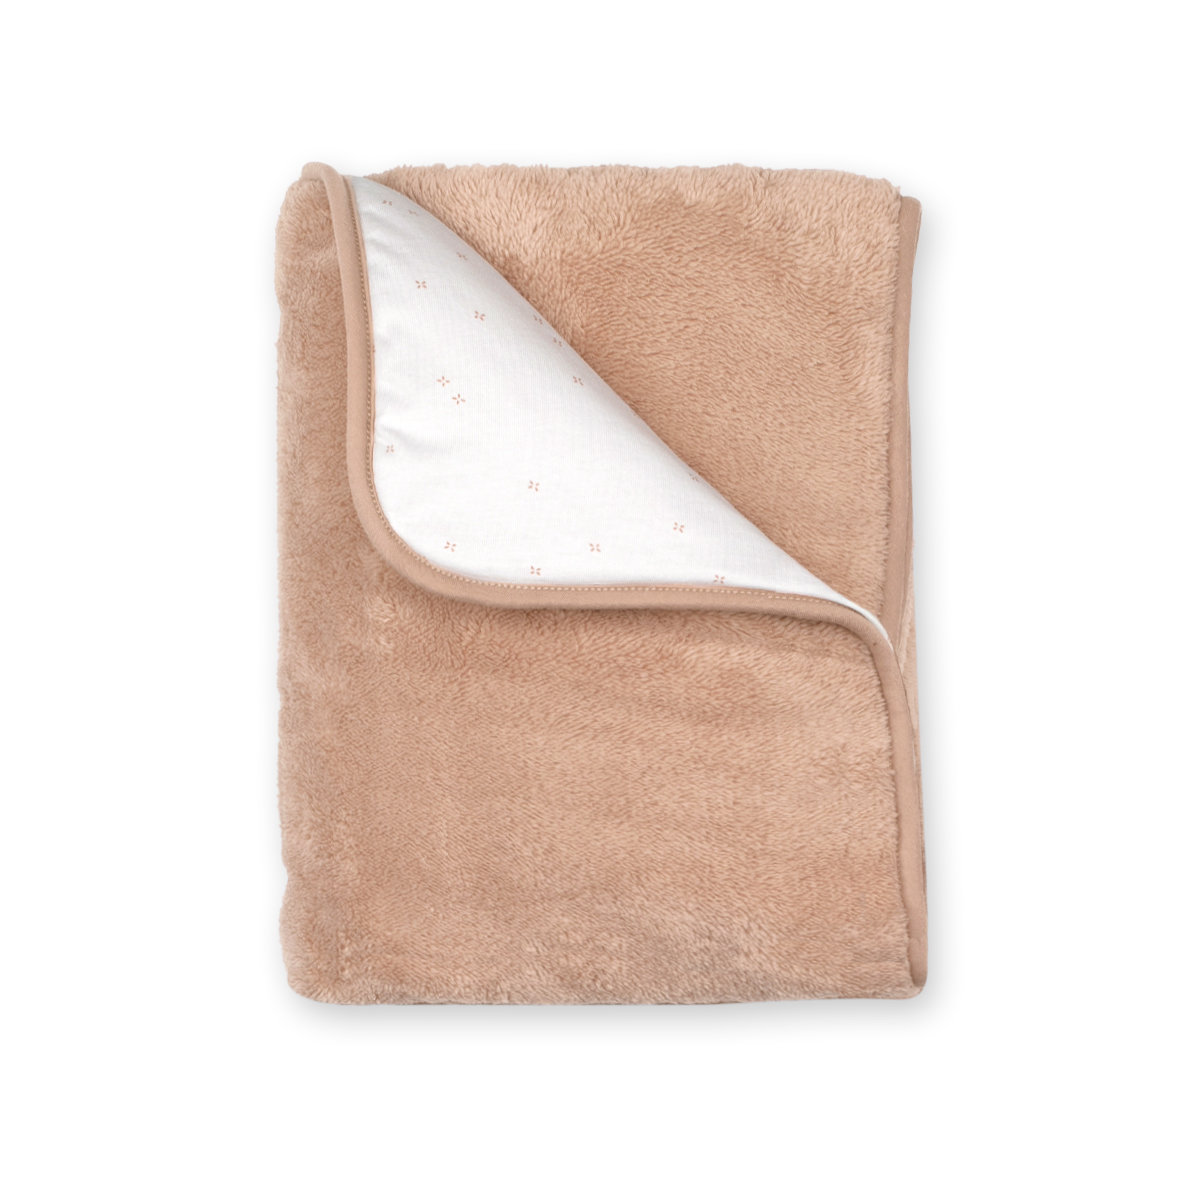 Blanket Pady jersey + softy 75x100cm BEMINI Natural beige tog 3